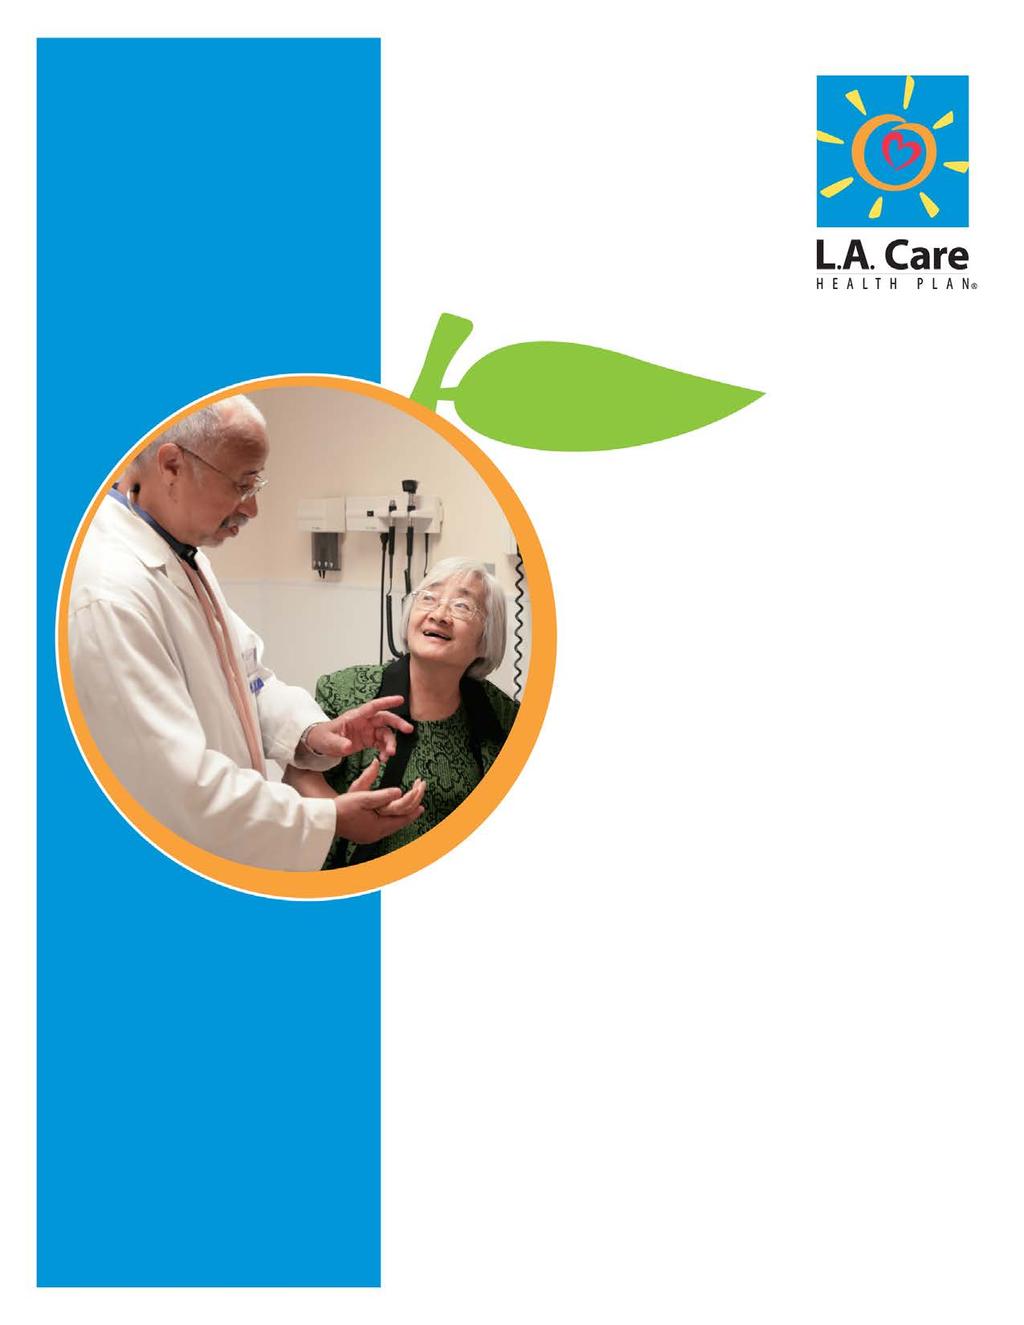 L.A. CARE HEALTH PLAN MEDICARE